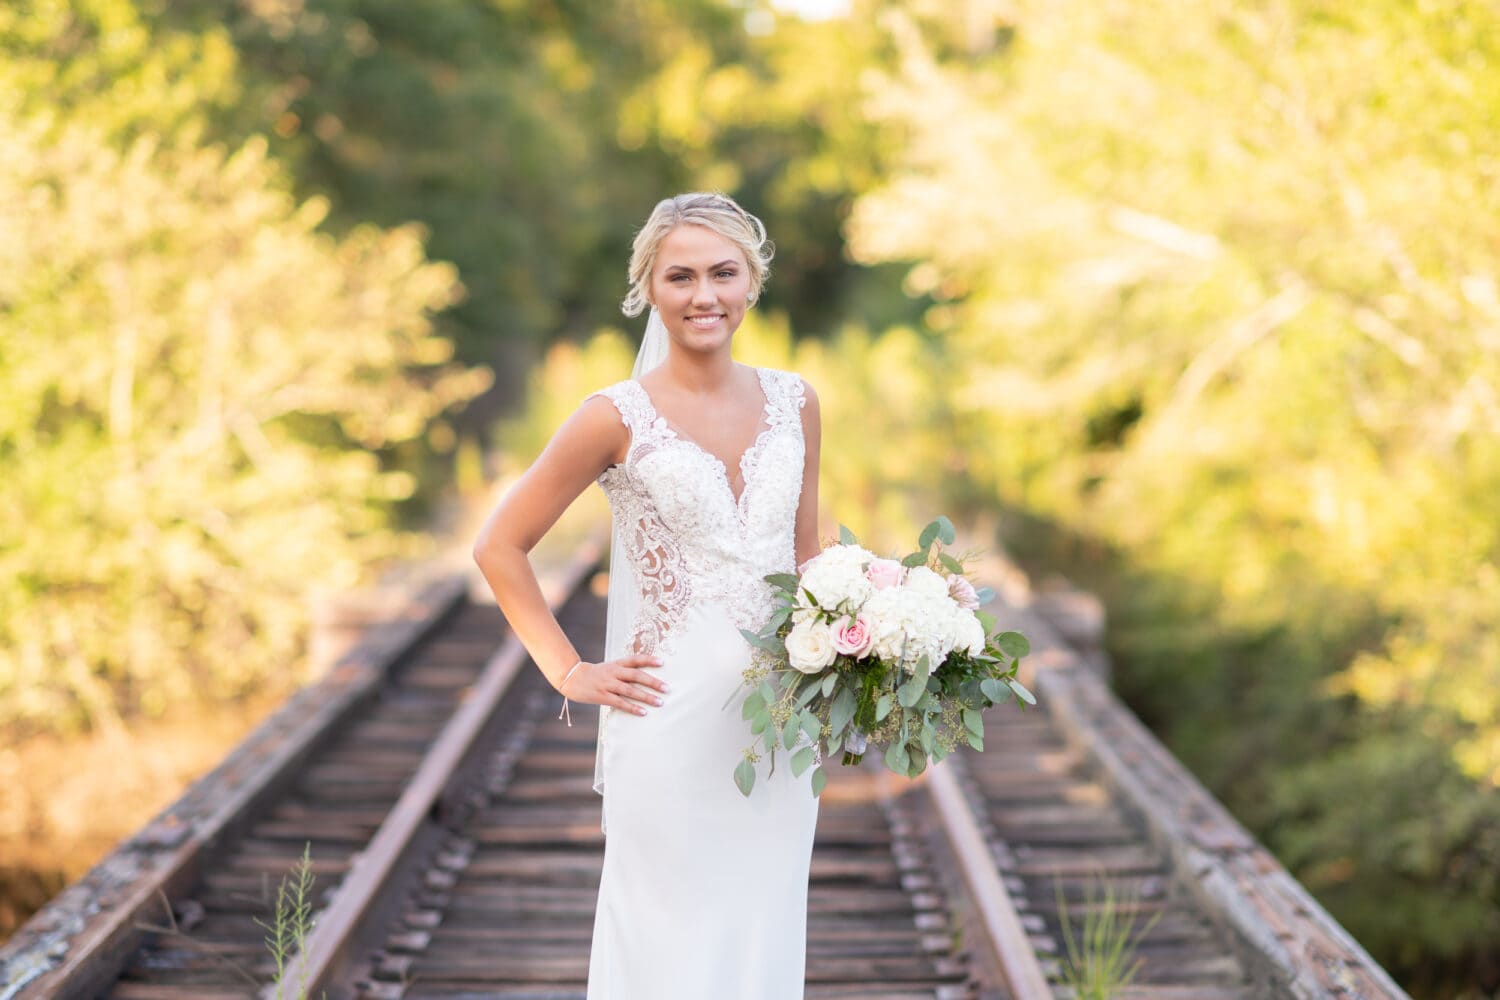 Bride on the train tracks - Conway River Walk